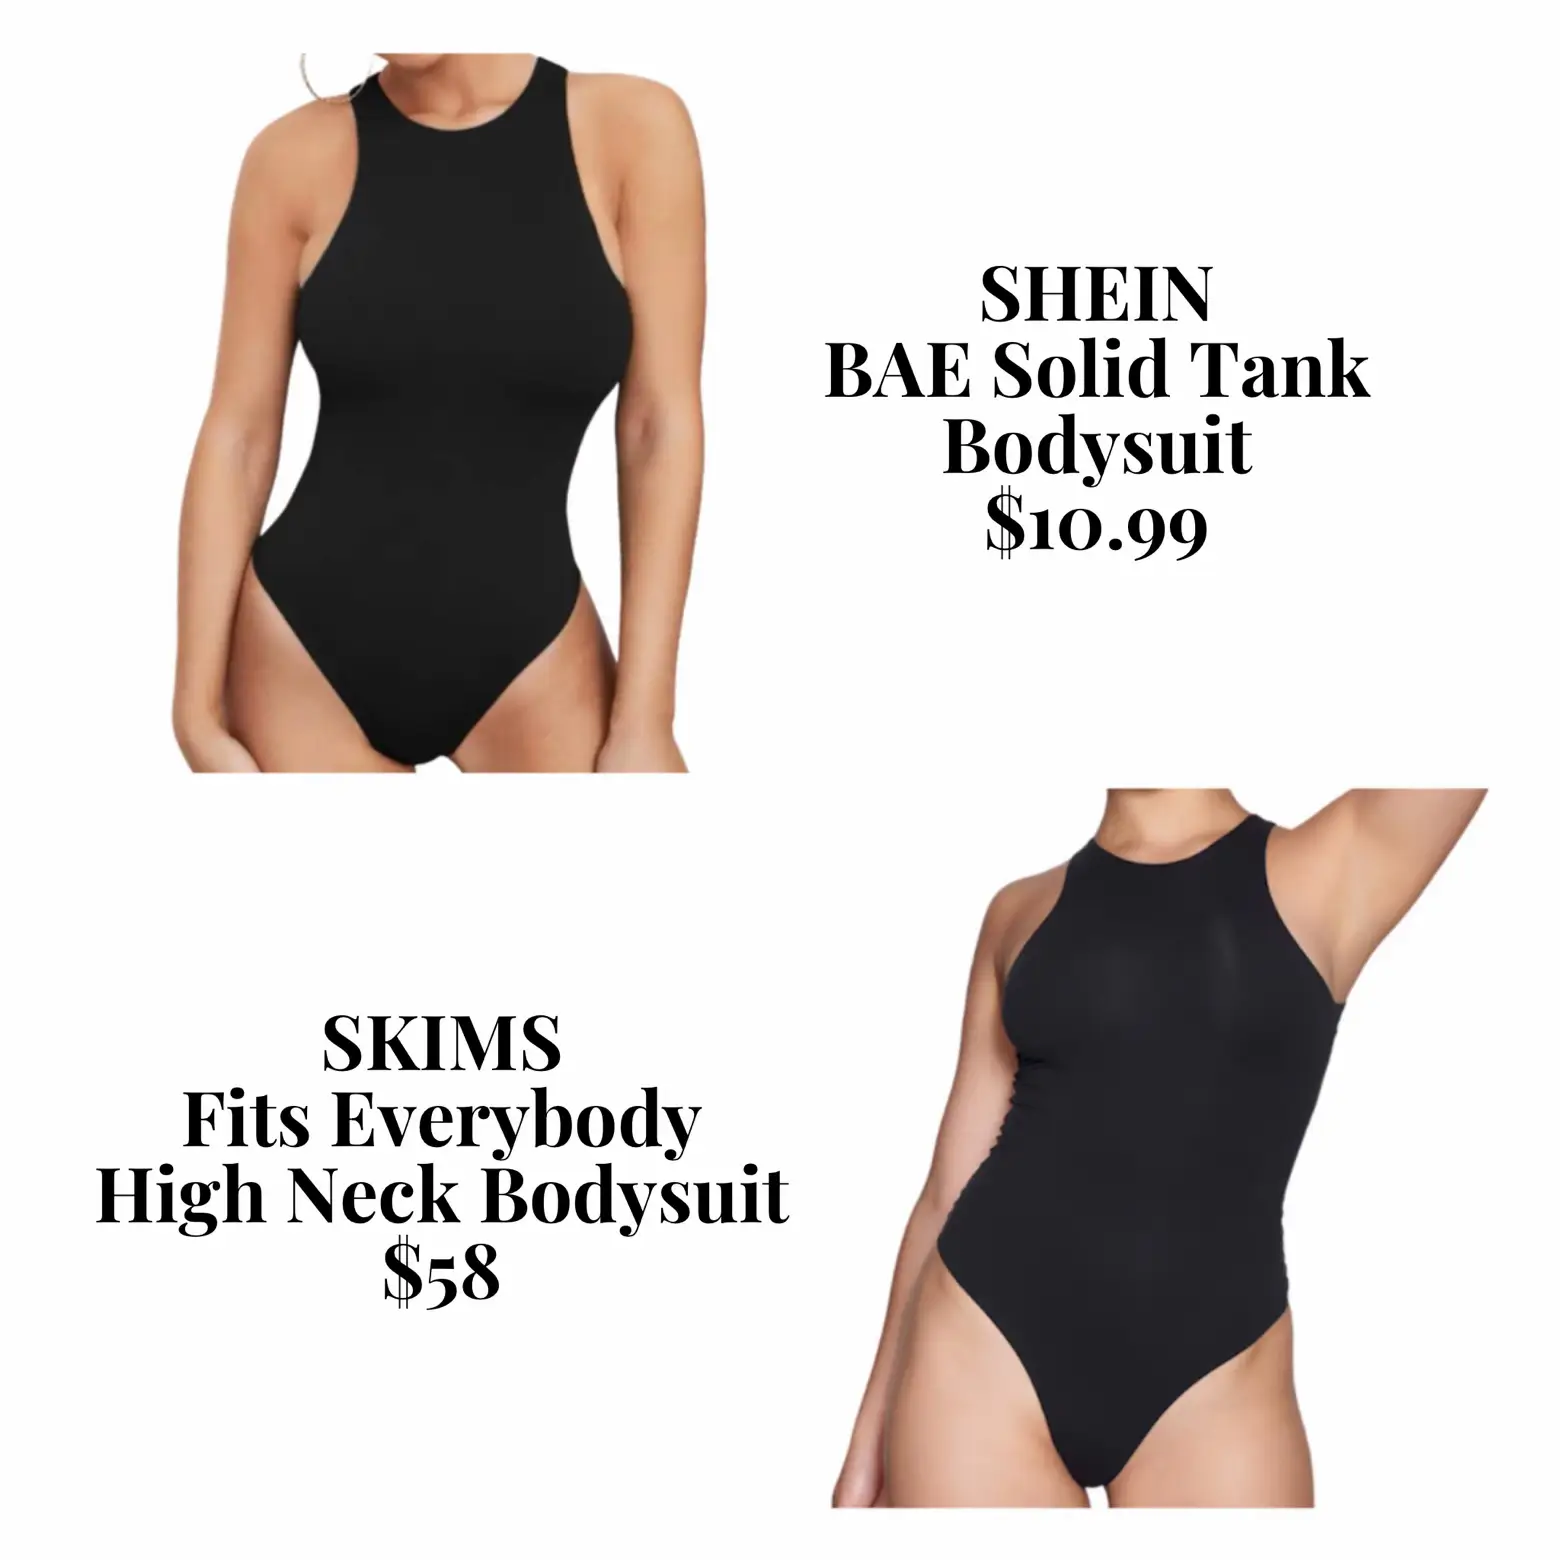 SKIMS finally got the skims bodysuit and it is SO WORTH IT! RUN🏃🏻‍♀, SKIMS